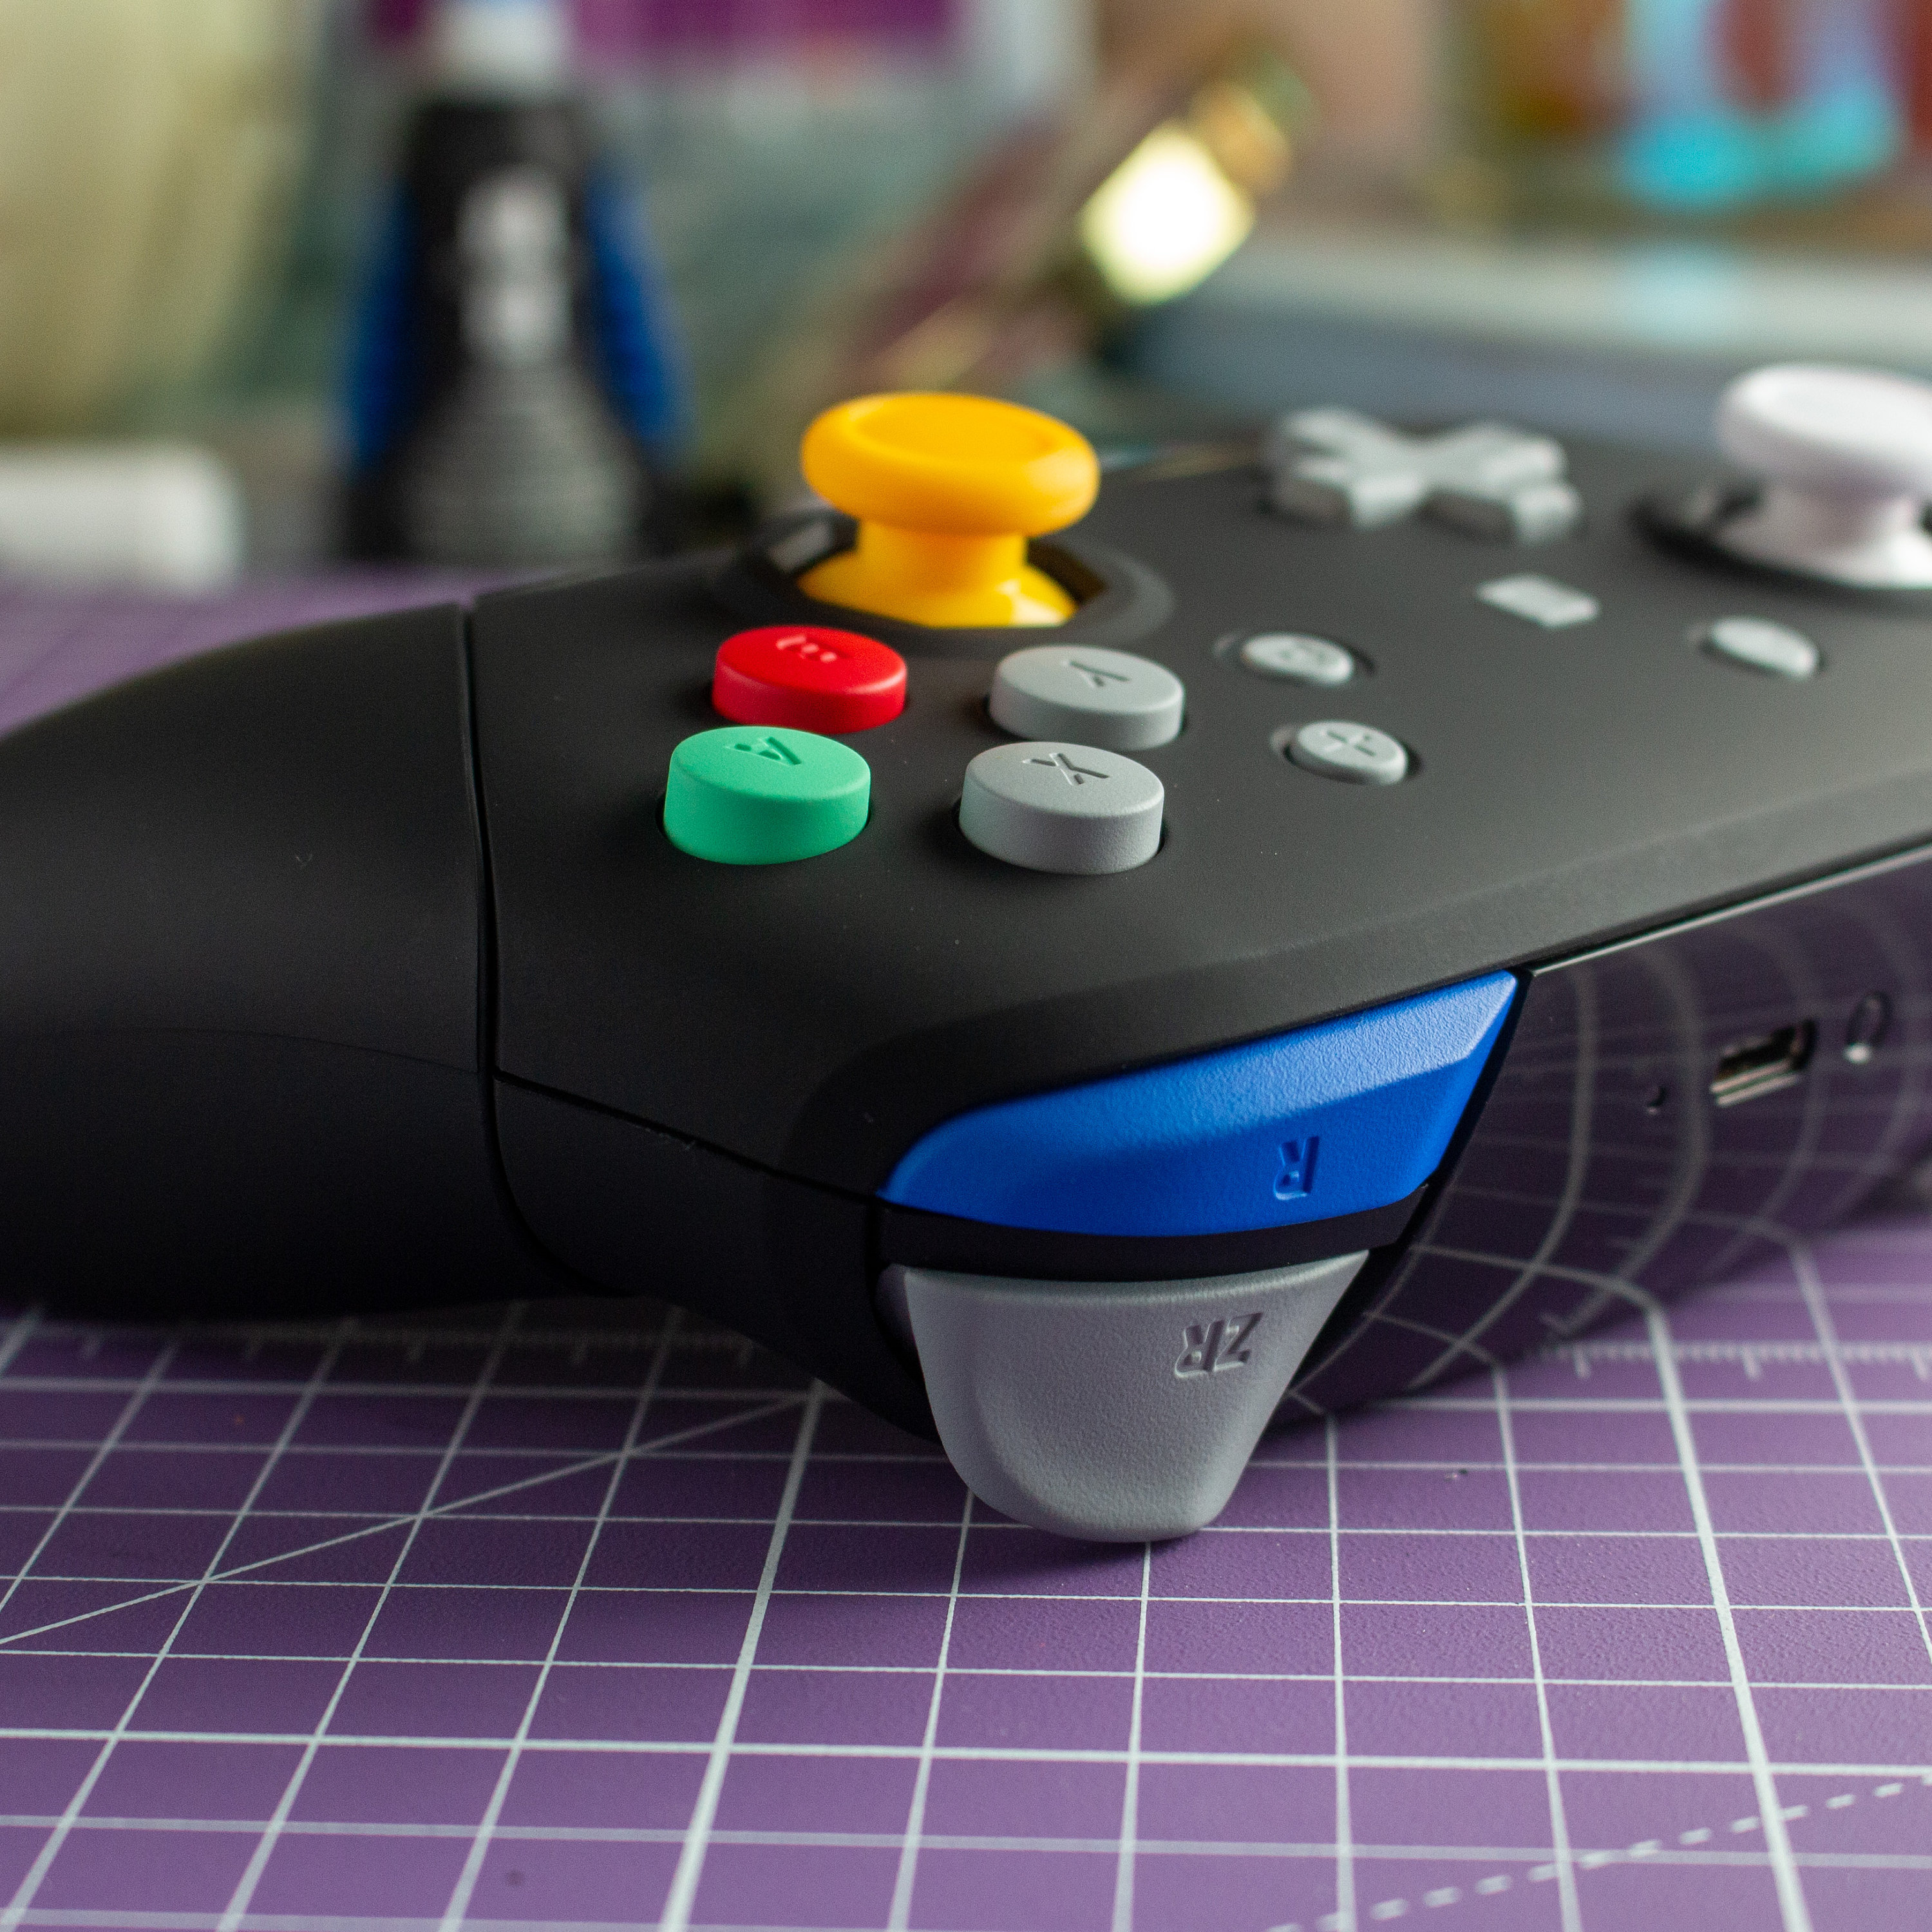 Pro-controller Clicky Button Mod Nintendo Switch Controller 